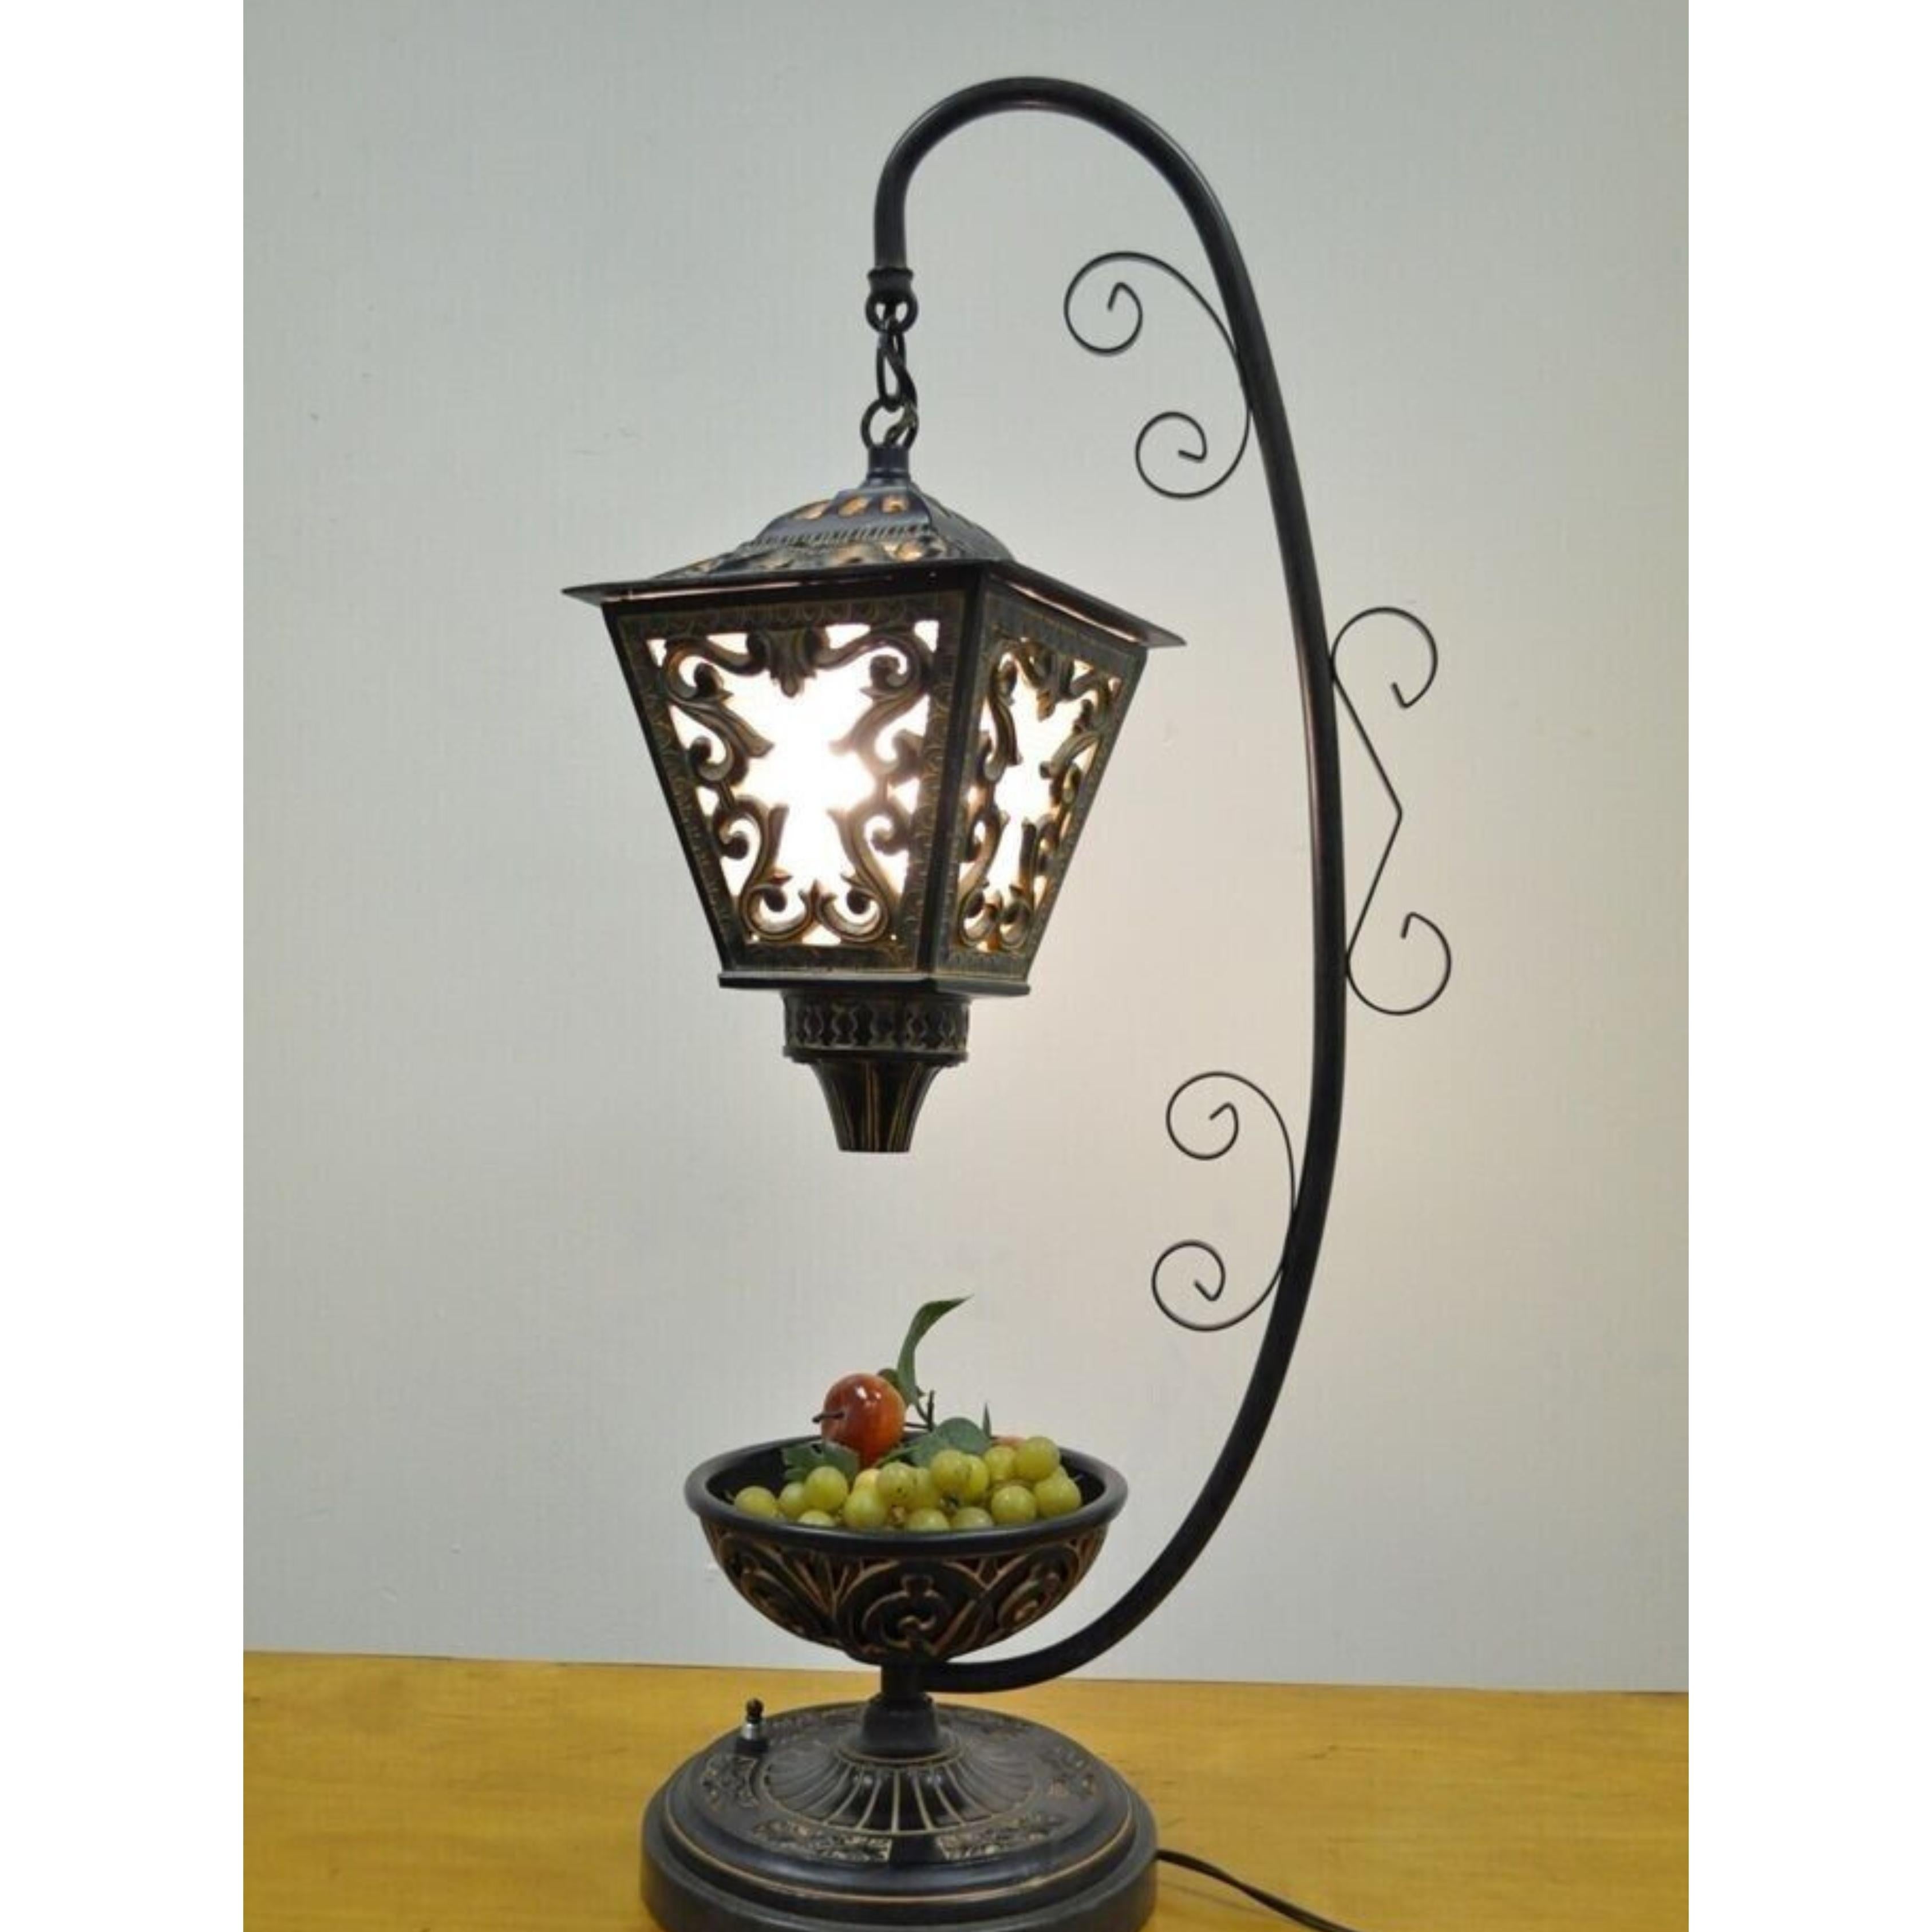 Vintage Italian Style Scrolling Metal Hanging Lantern Fruit Bowl Table Lamp. Circa Late 20th Century. Measurements: 28.5